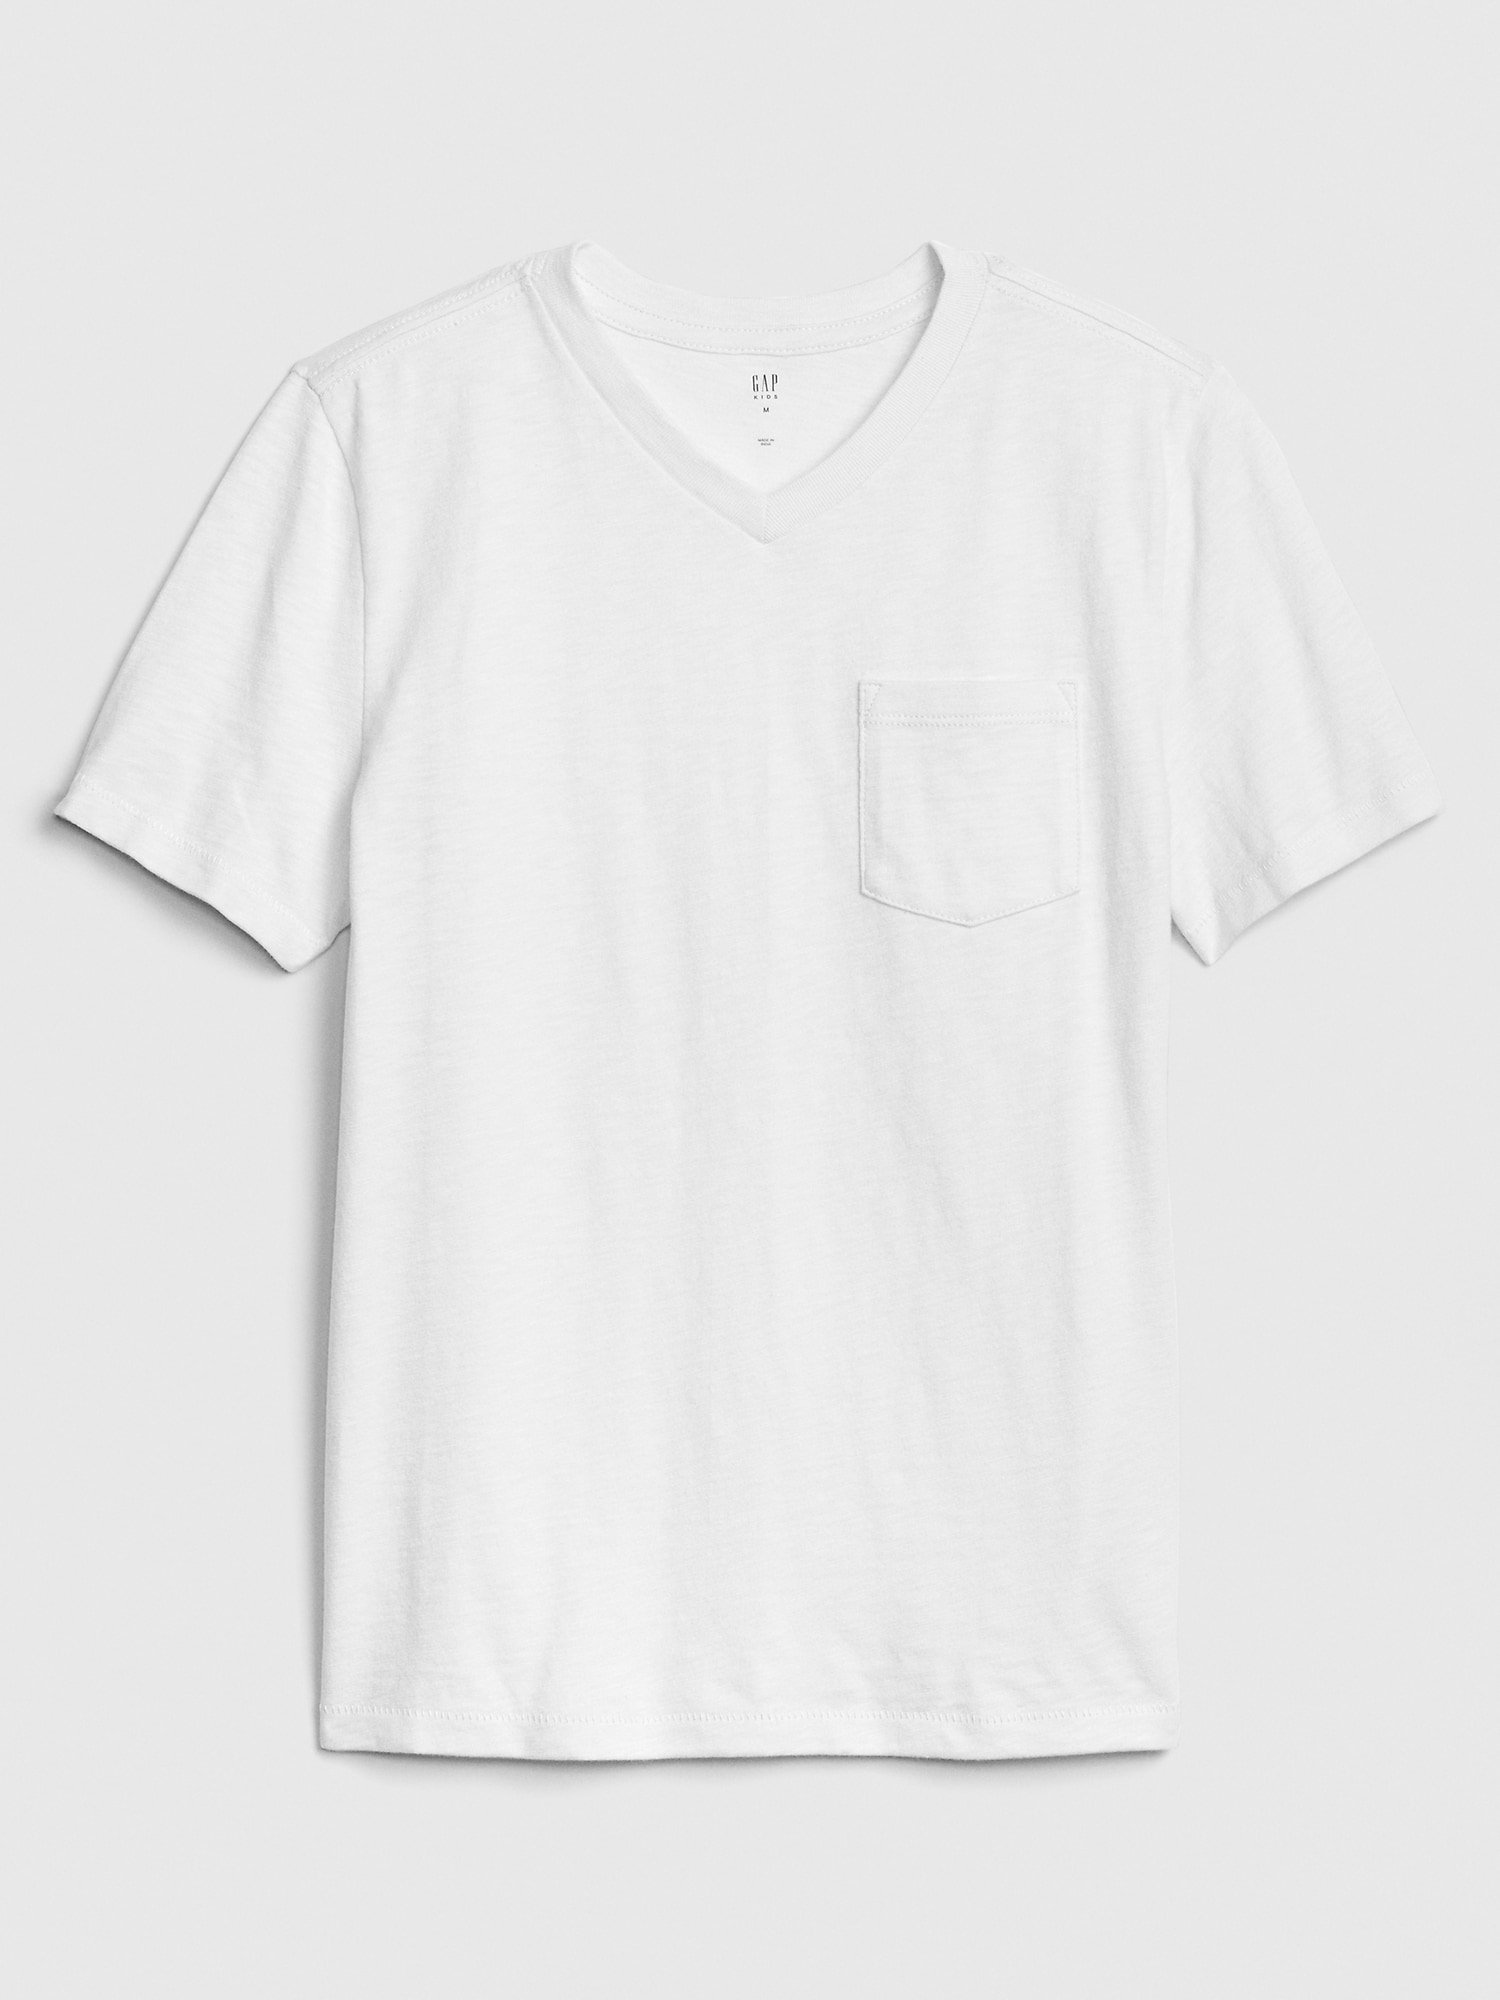 Cepli T-shirt product image